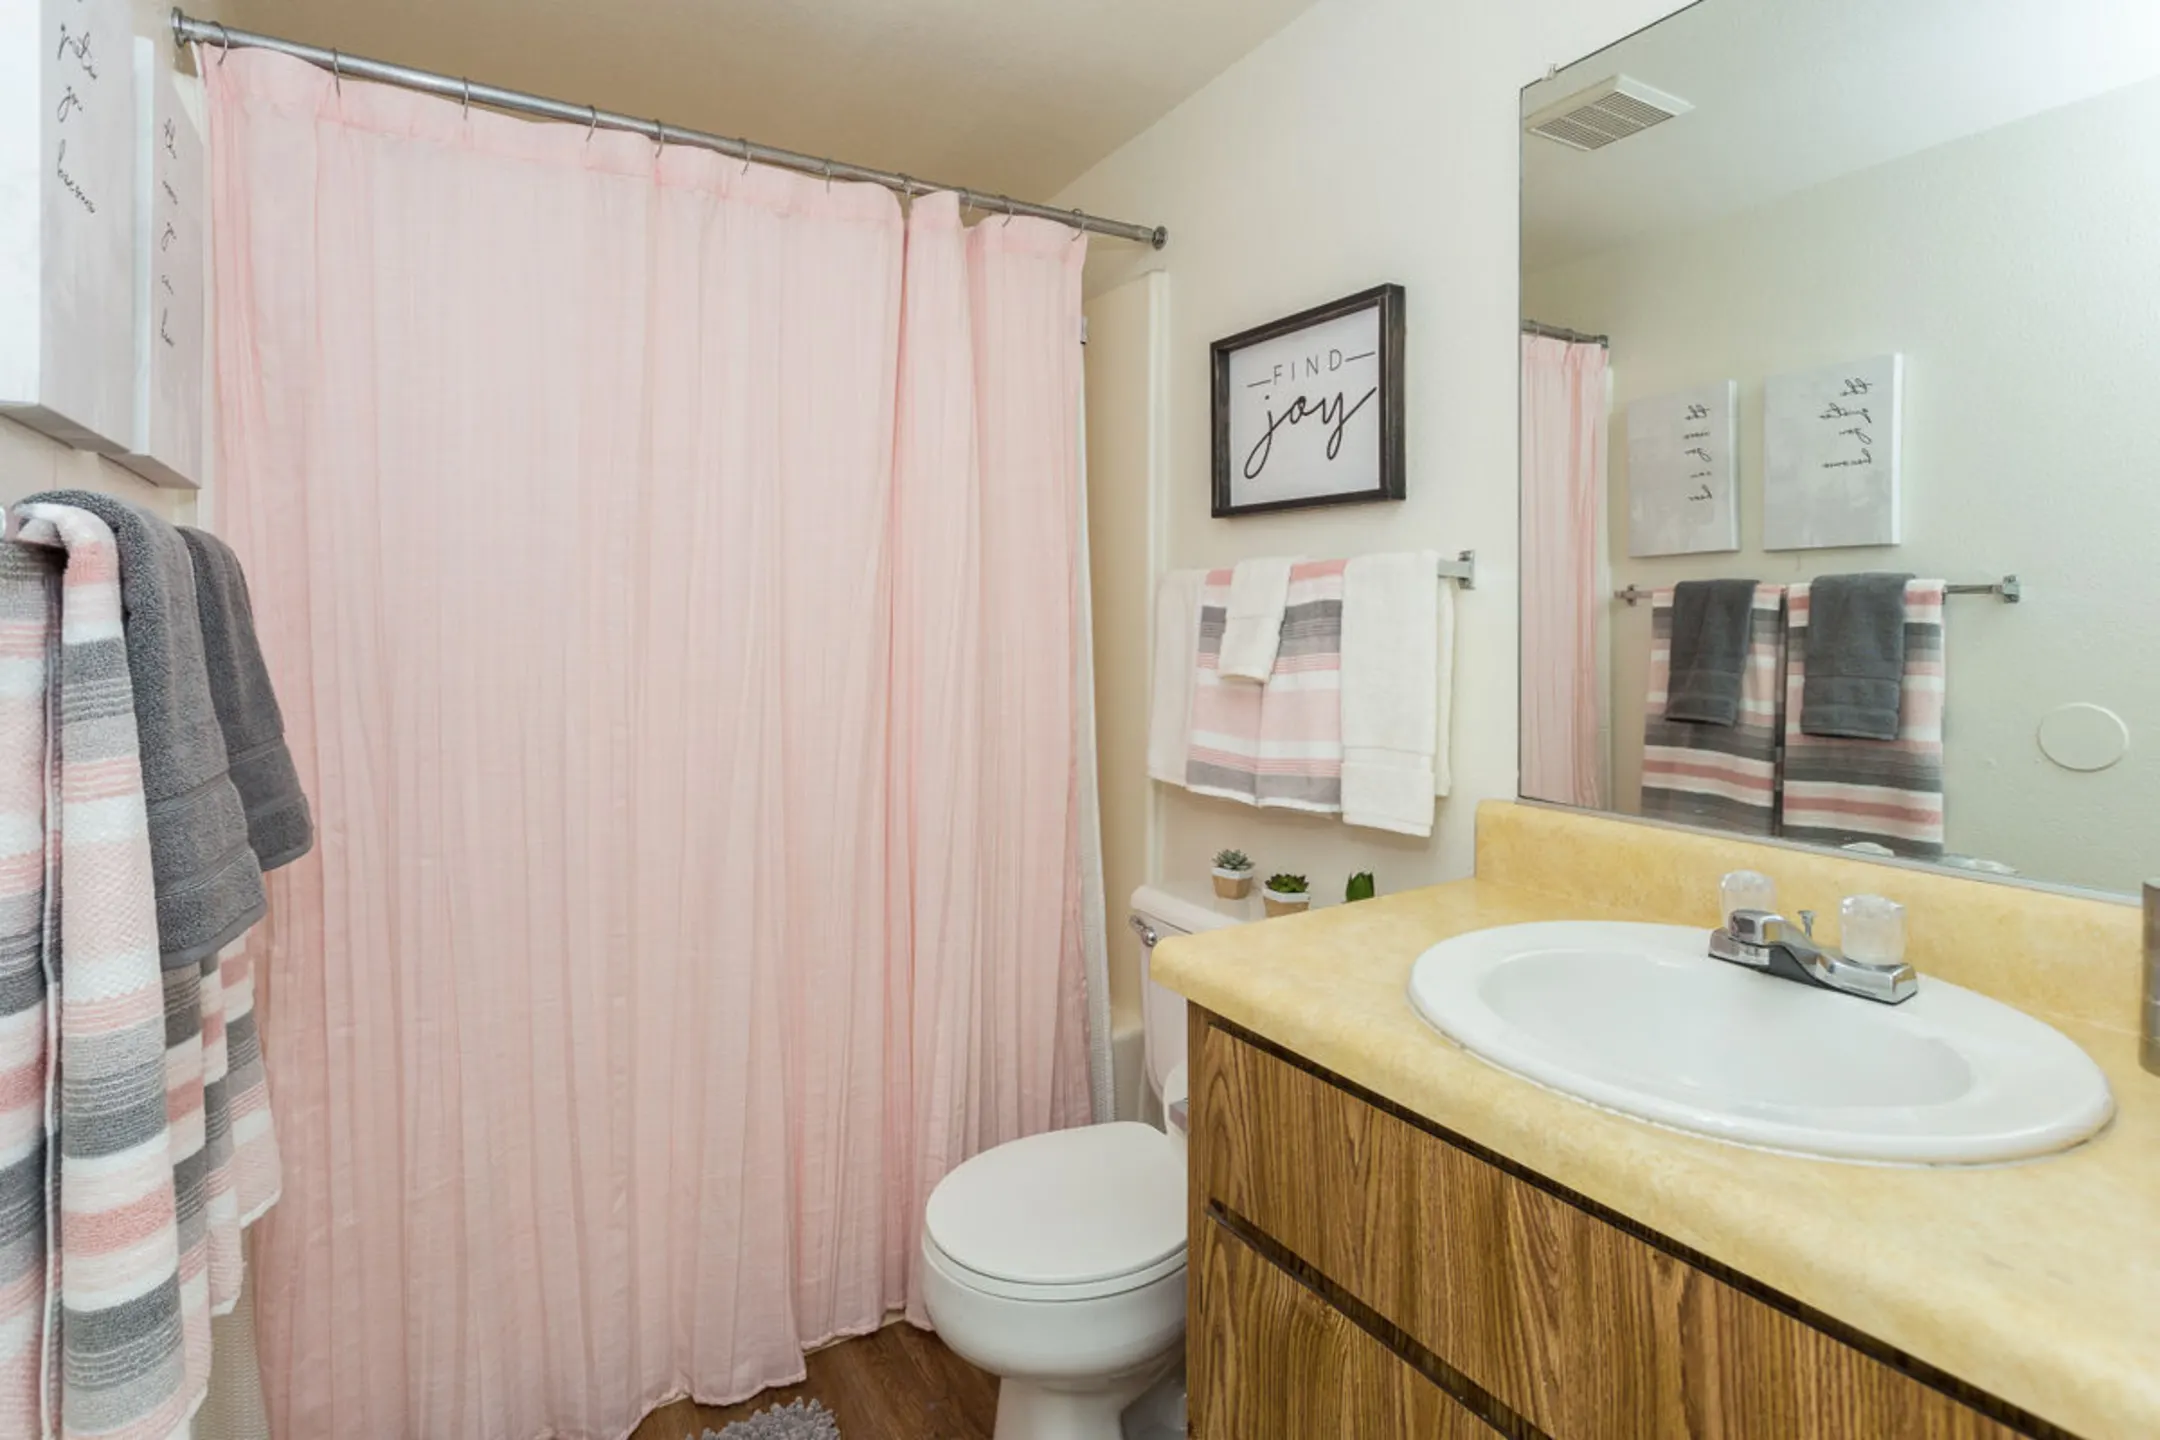 Bathroom - Pine View Village - Flagstaff, AZ